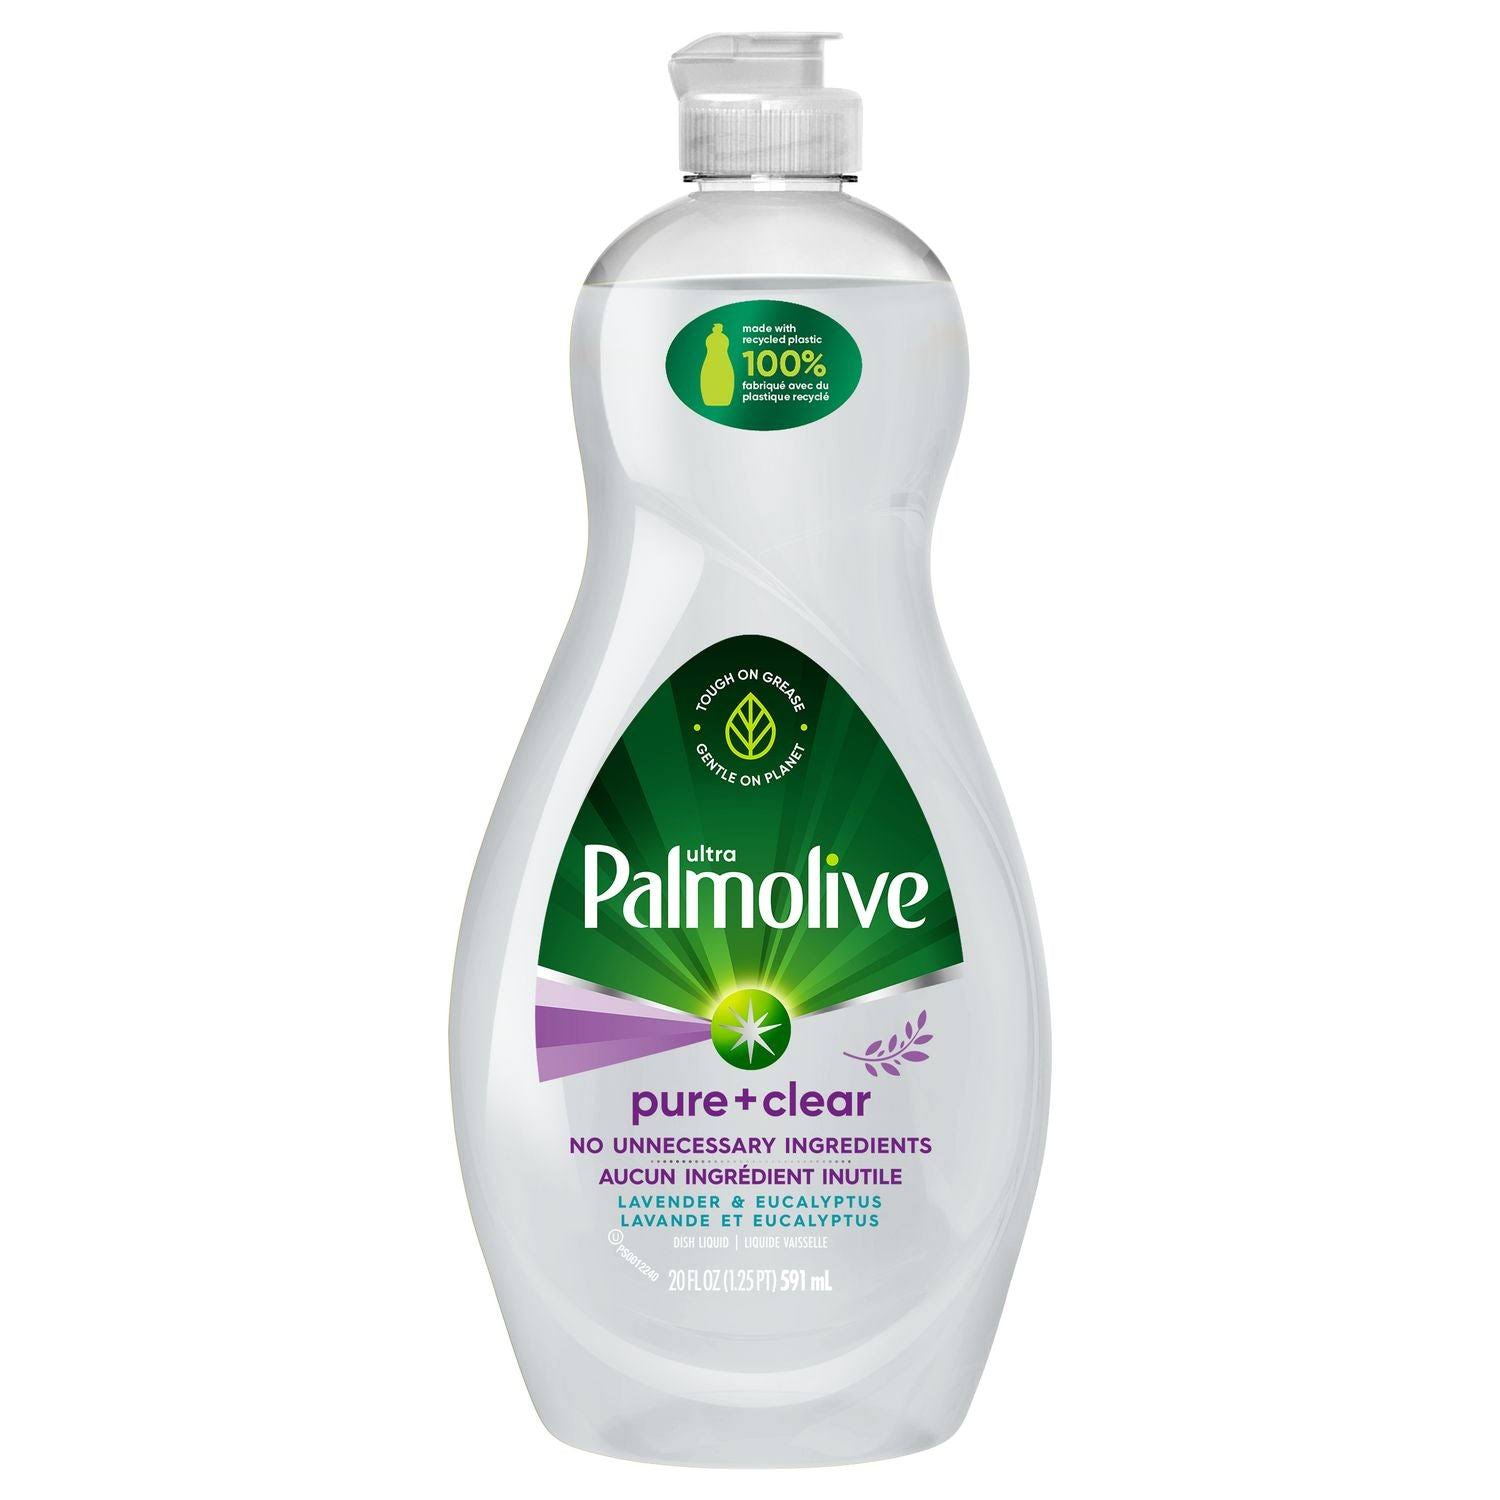 Palmolive Pure + Clear Ultra Lavender & Eucalyptus Dish Liquid - 20 fl oz